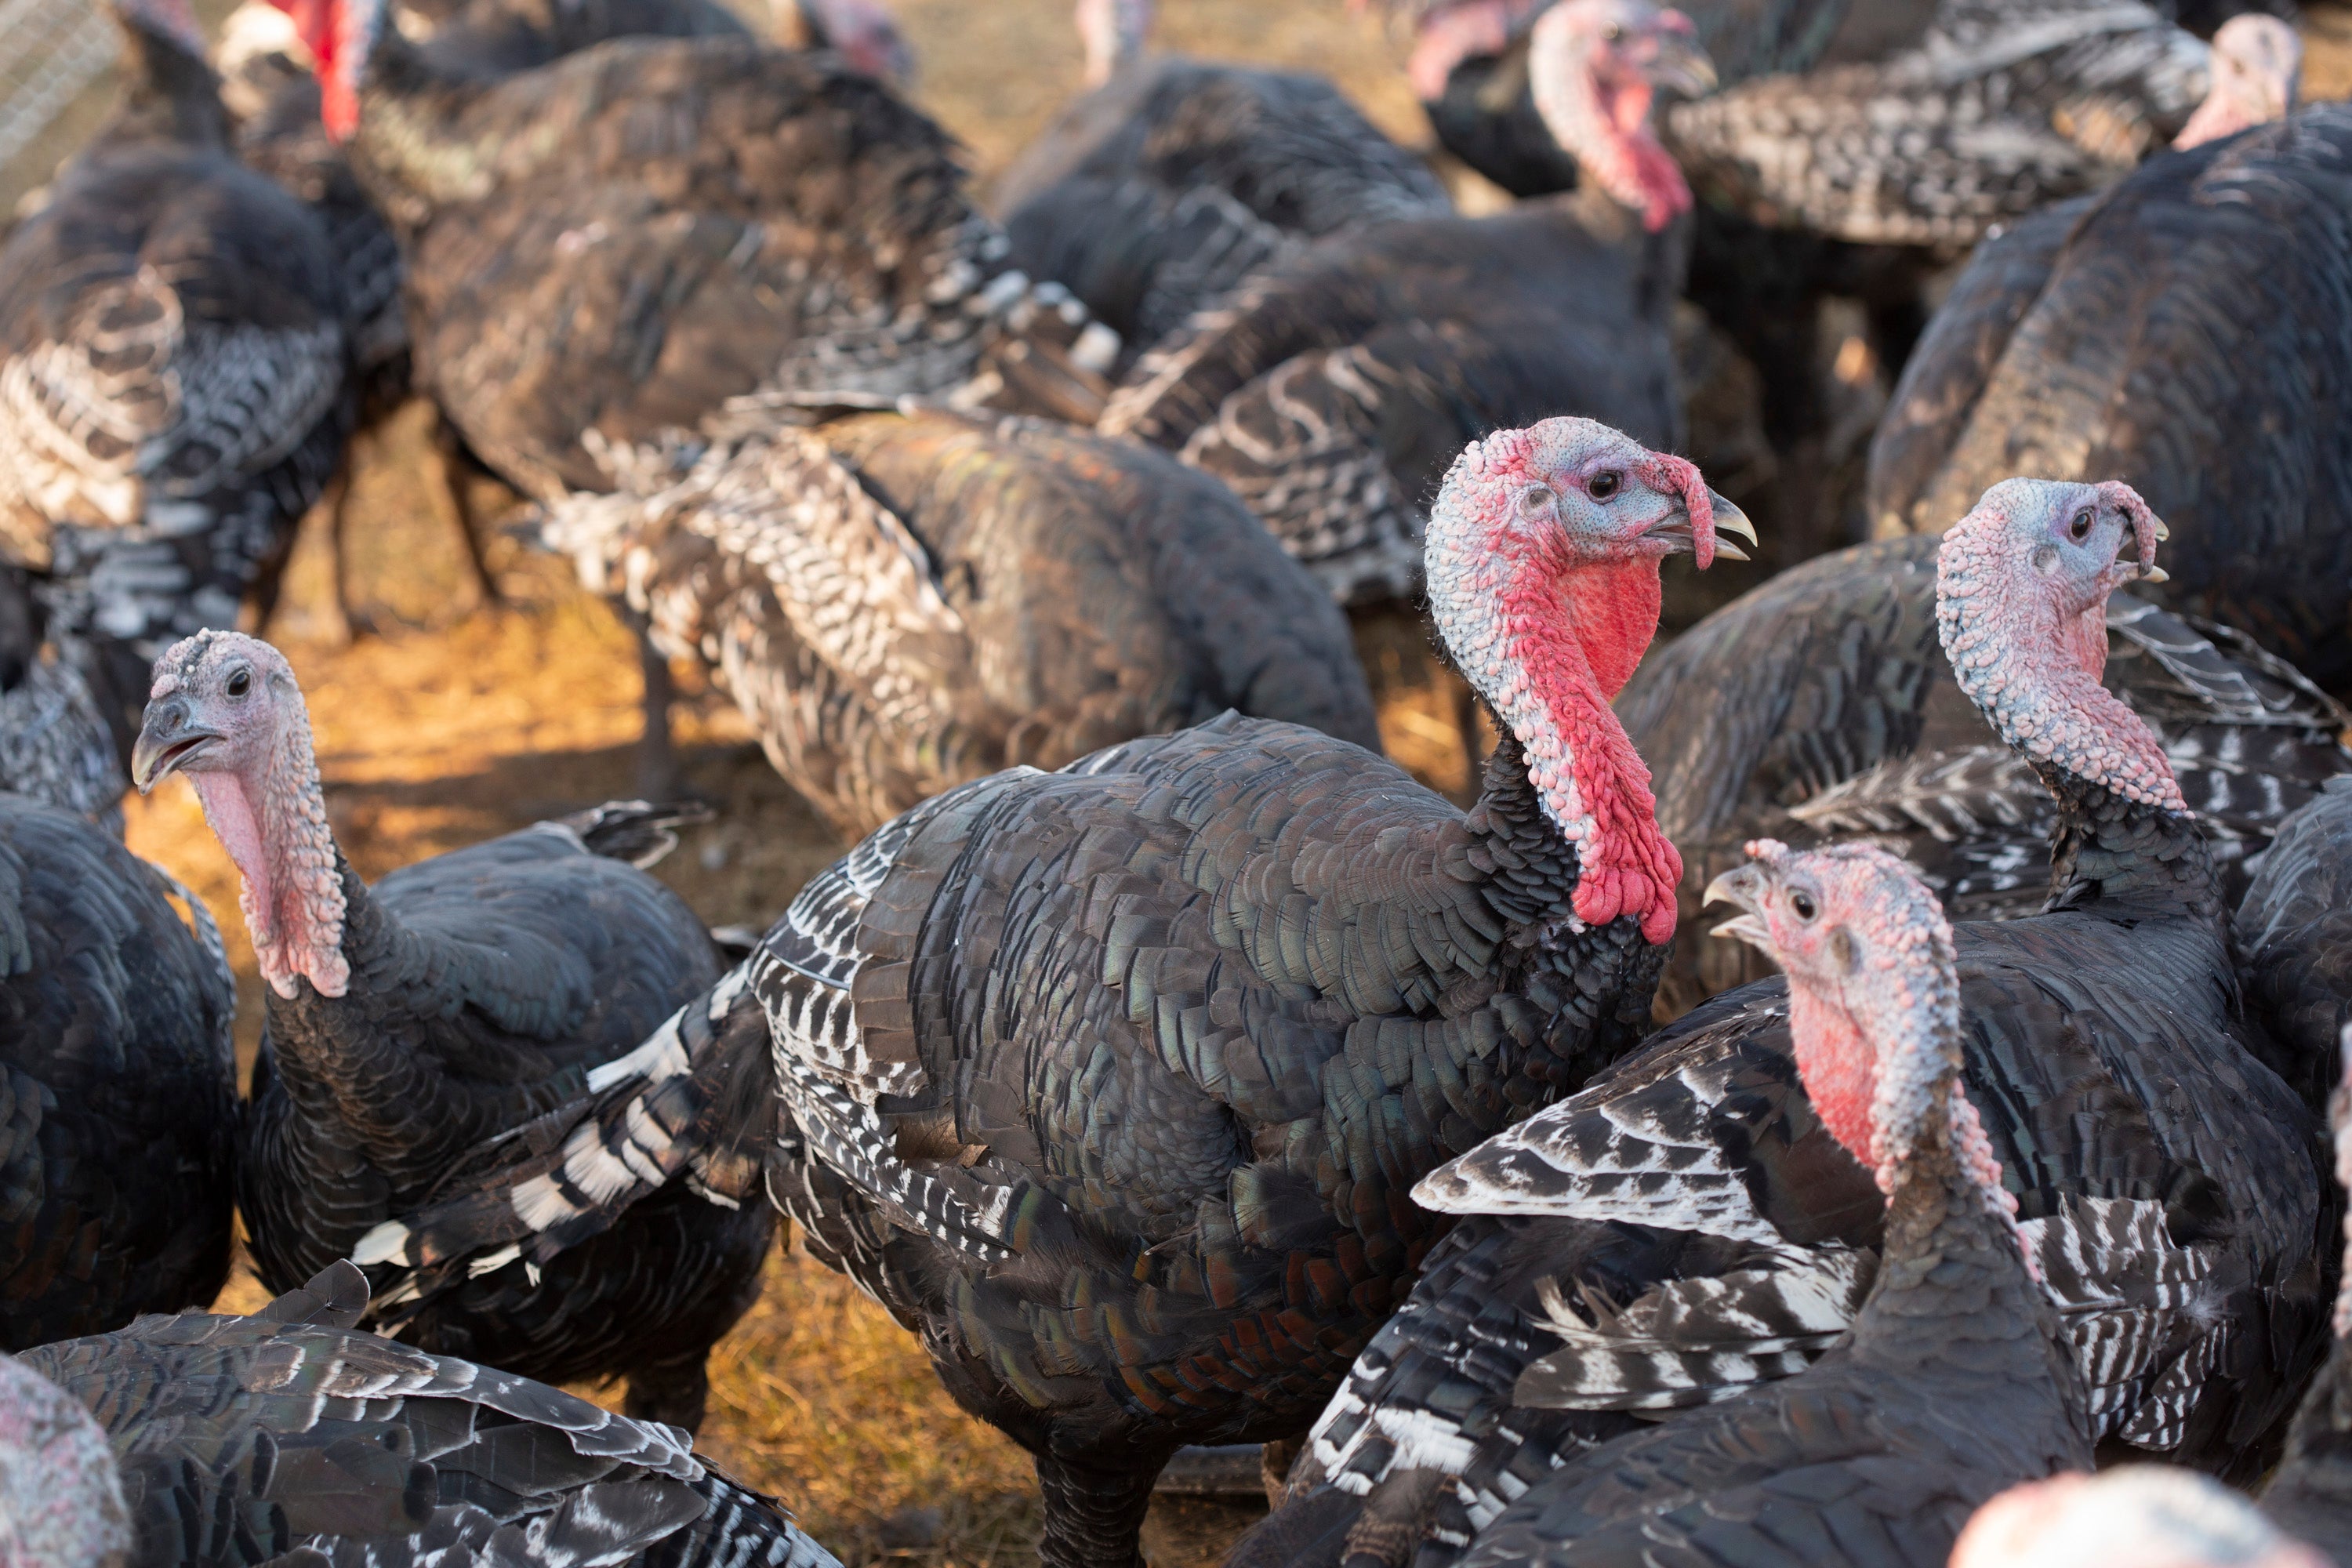 Farm fresh , Pasture raised, non-GMO Turkeys- whole bird – Sweet